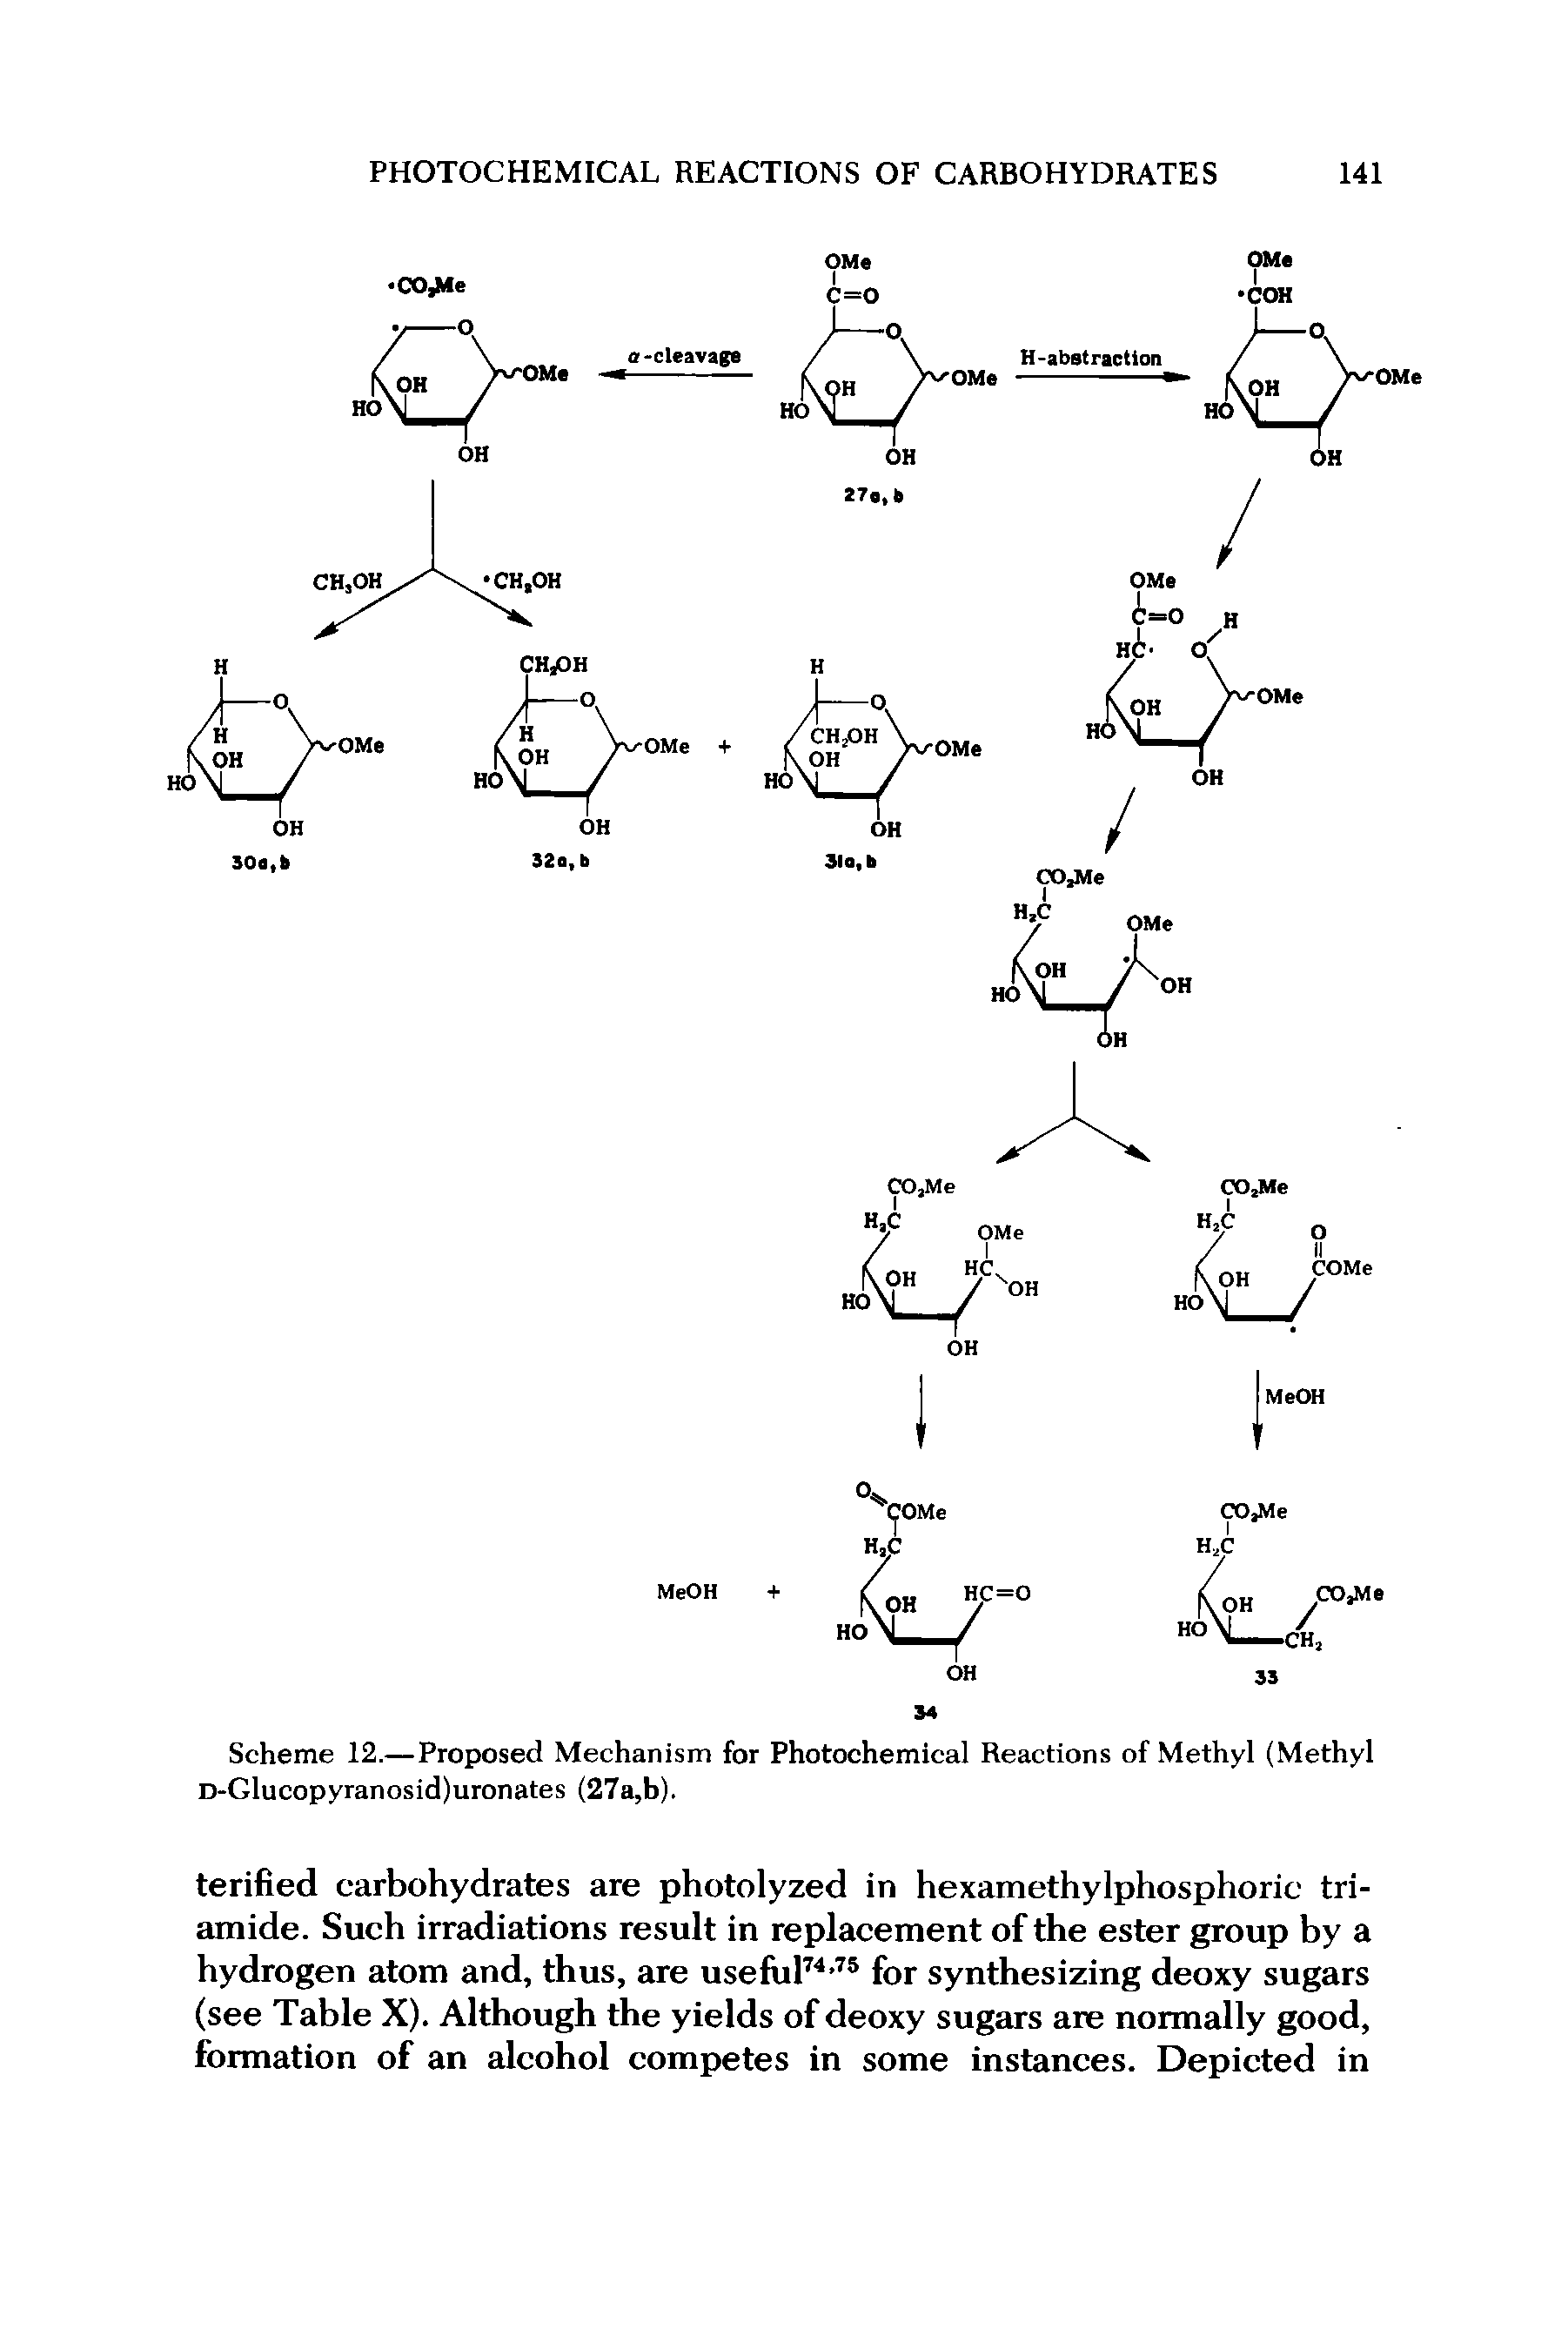 Scheme 12.—Proposed Mechanism for Photochemical Reactions of Methyl (Methyl D-Glucopyranosid)uronates (27a,b).